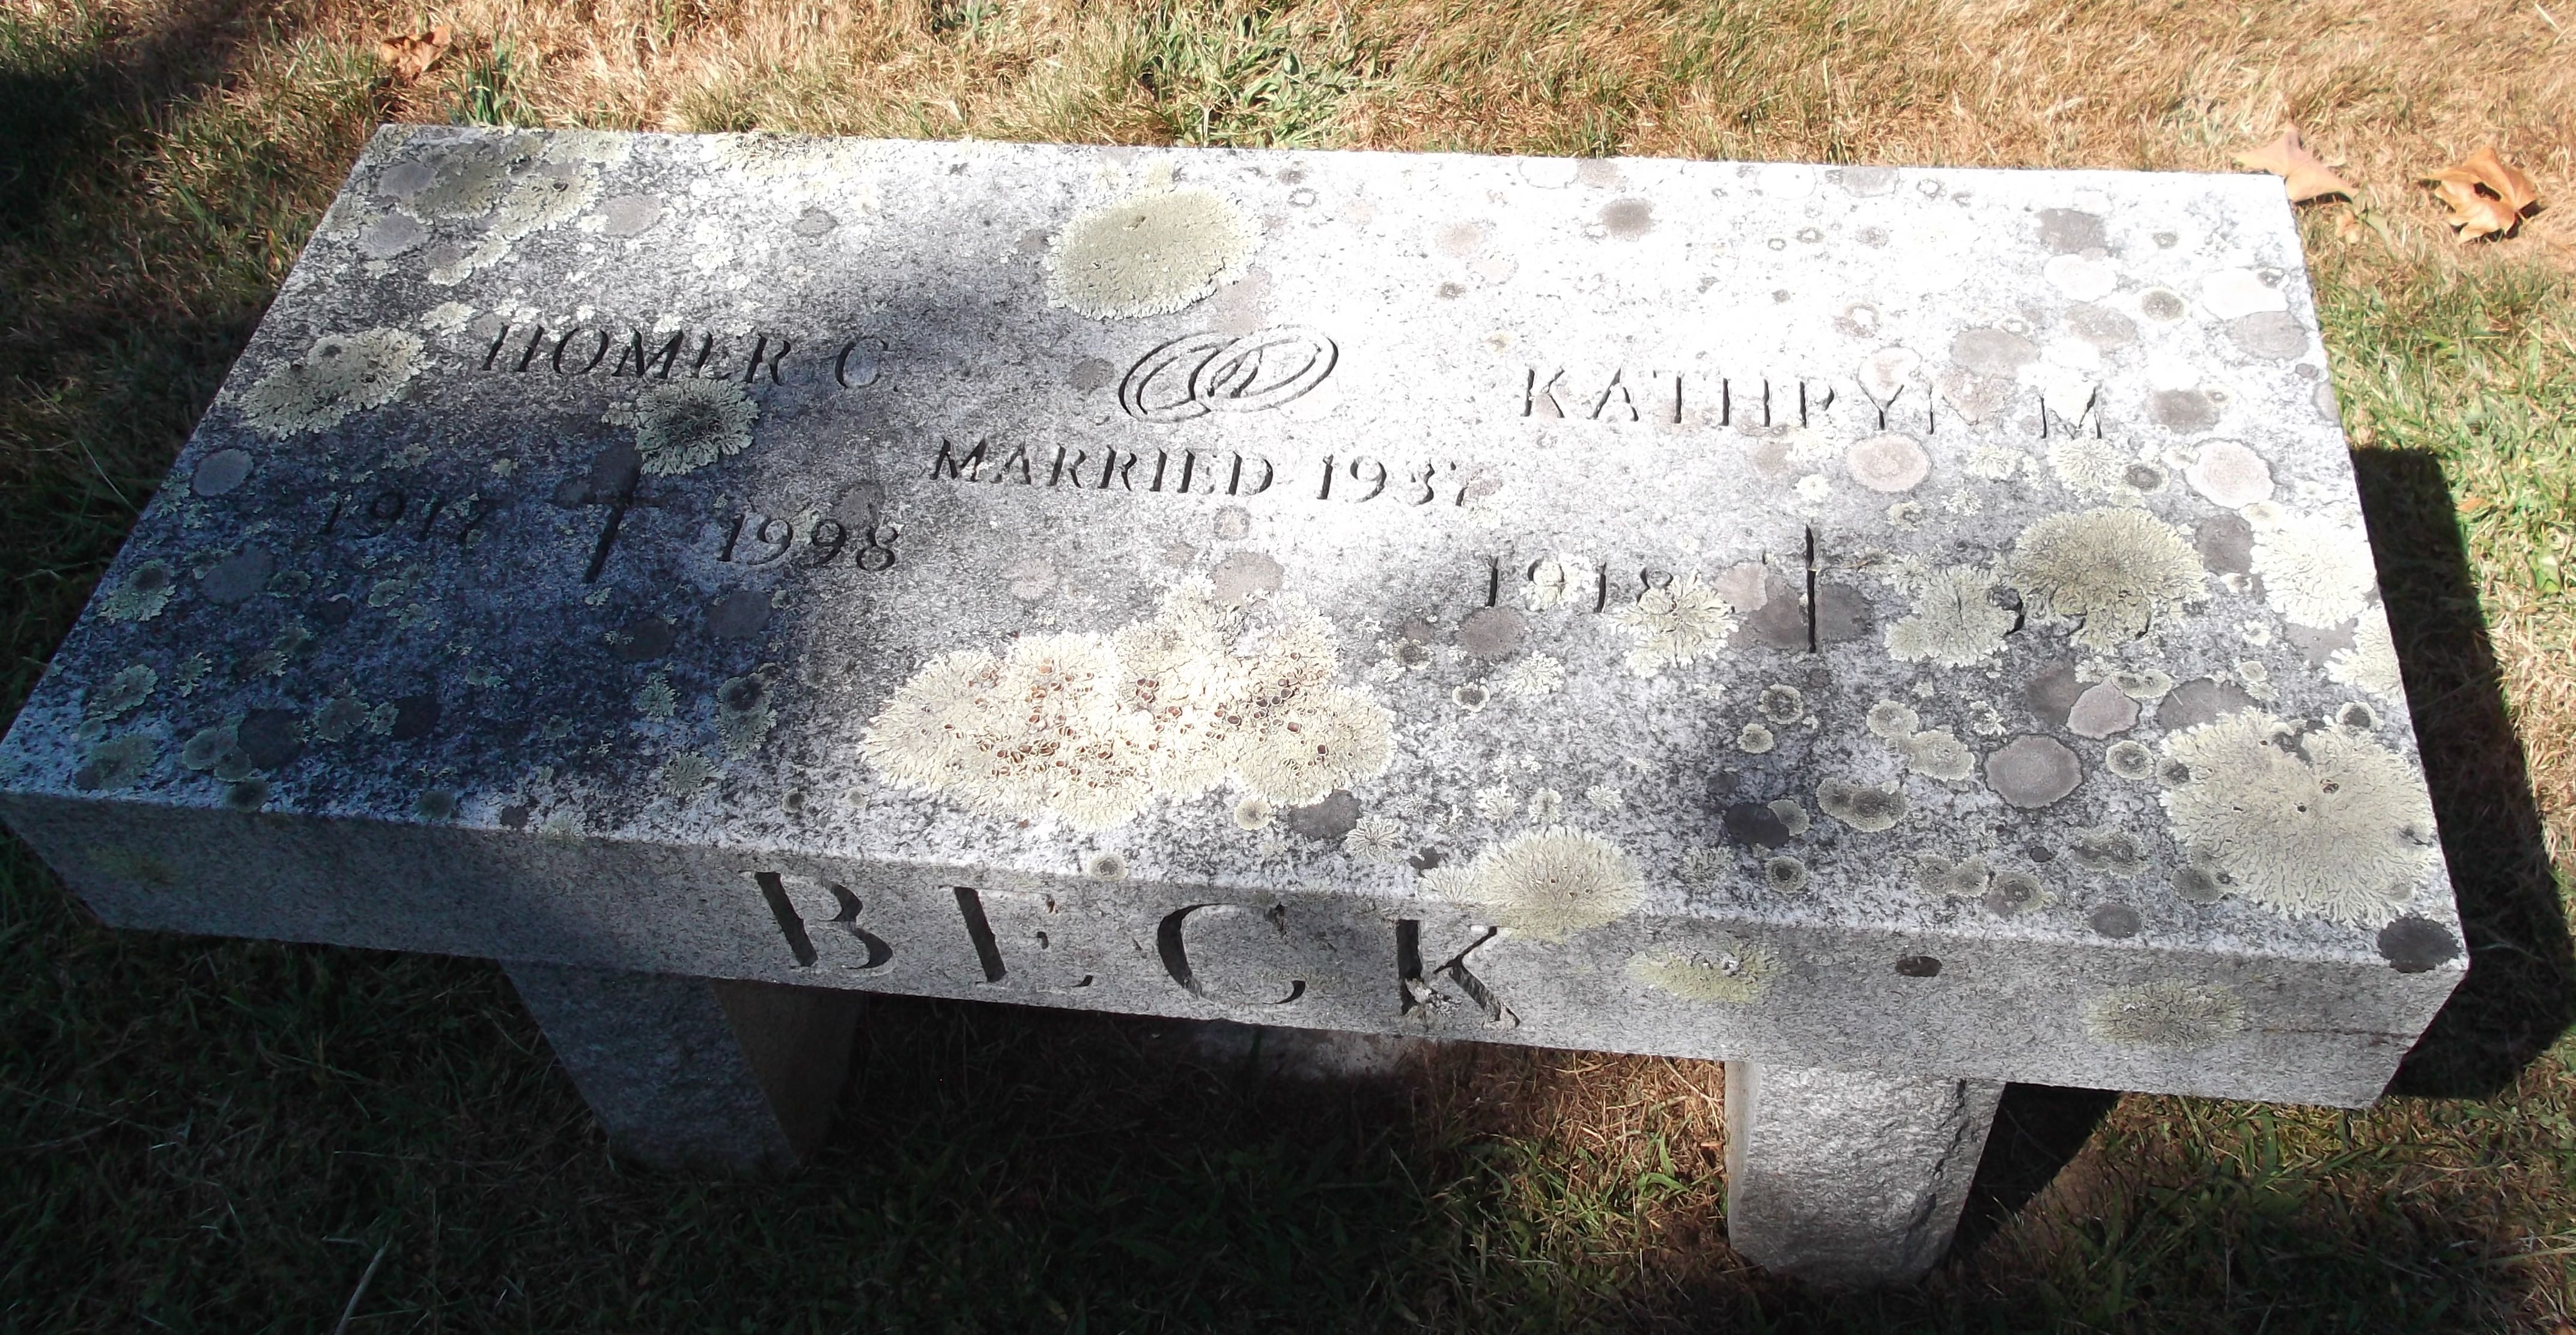 Kathryn & Homer Beck gravesite